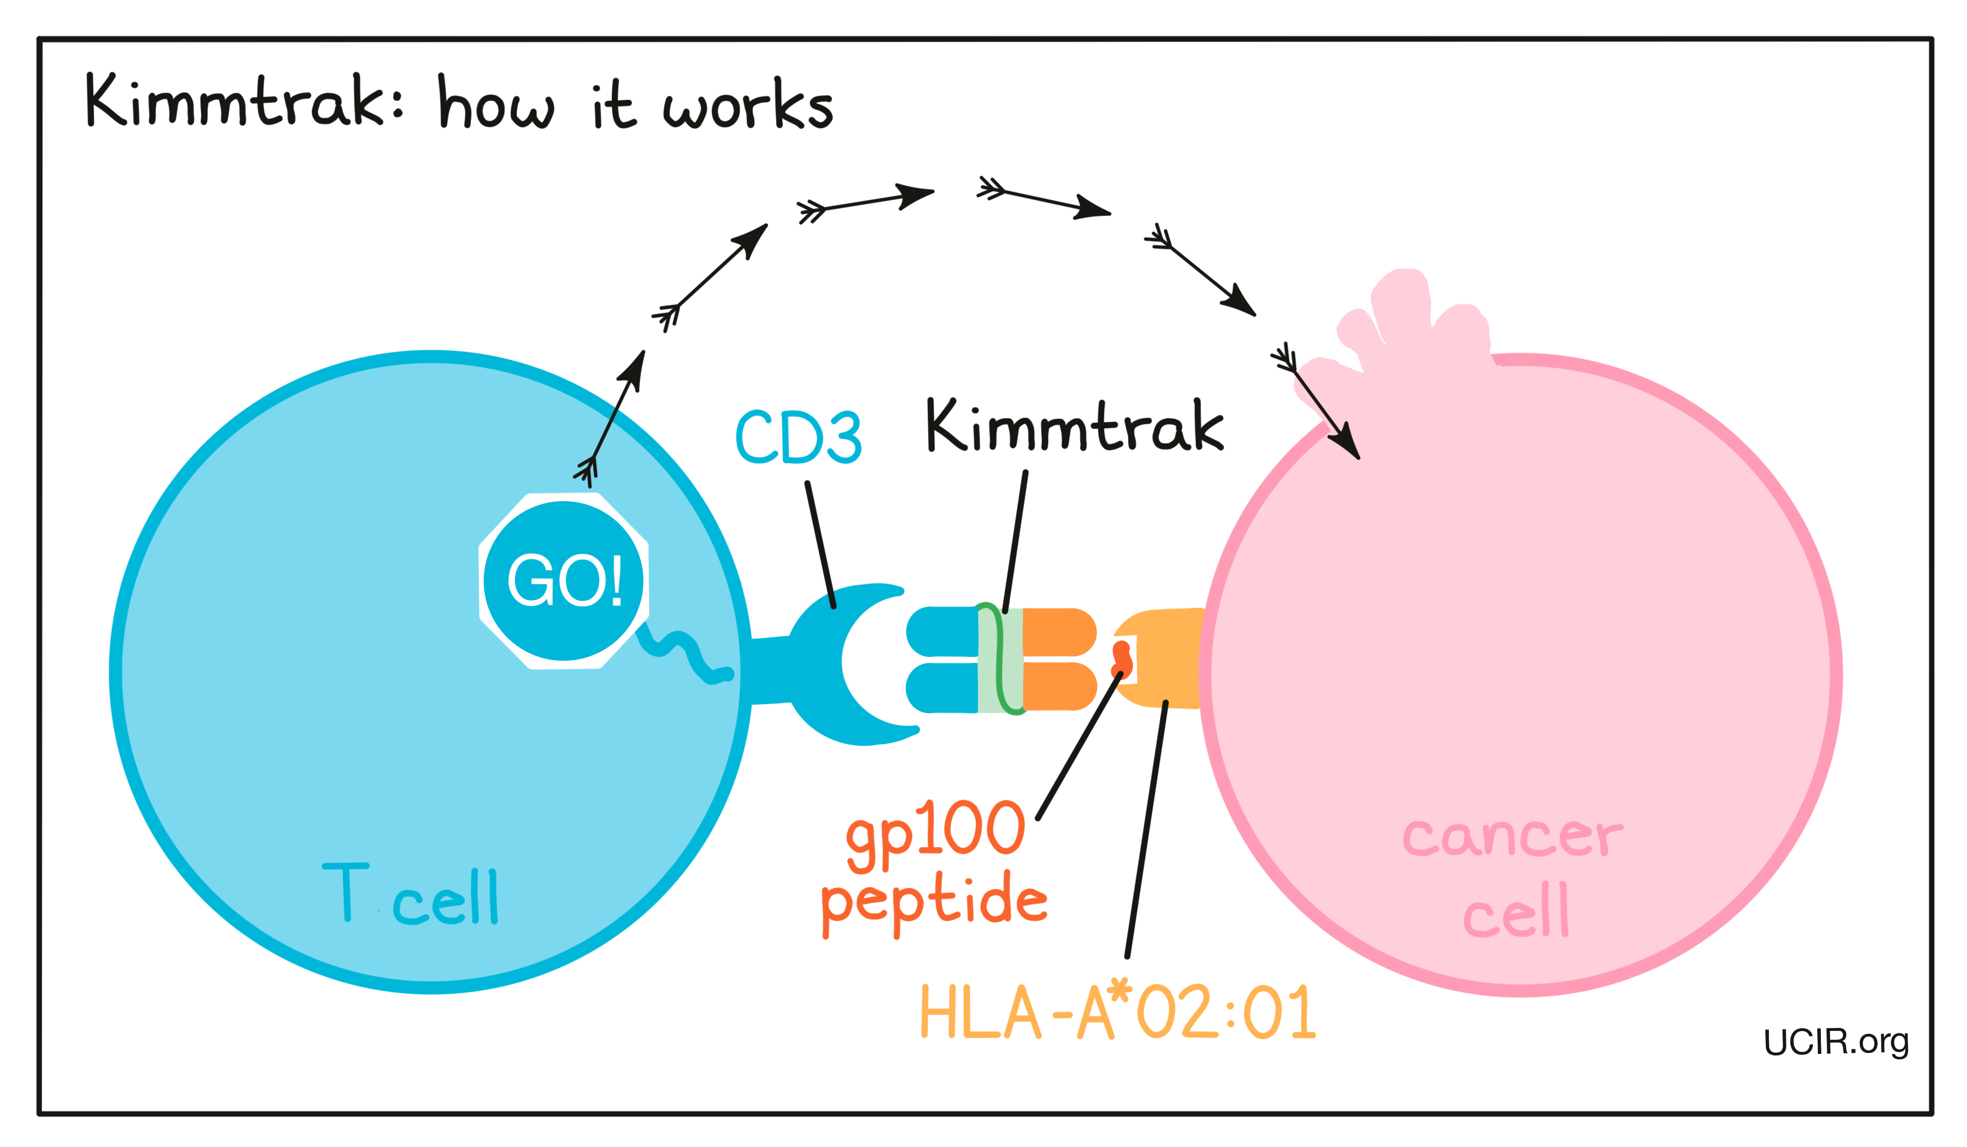 Illustration showing how Kimmtrak works